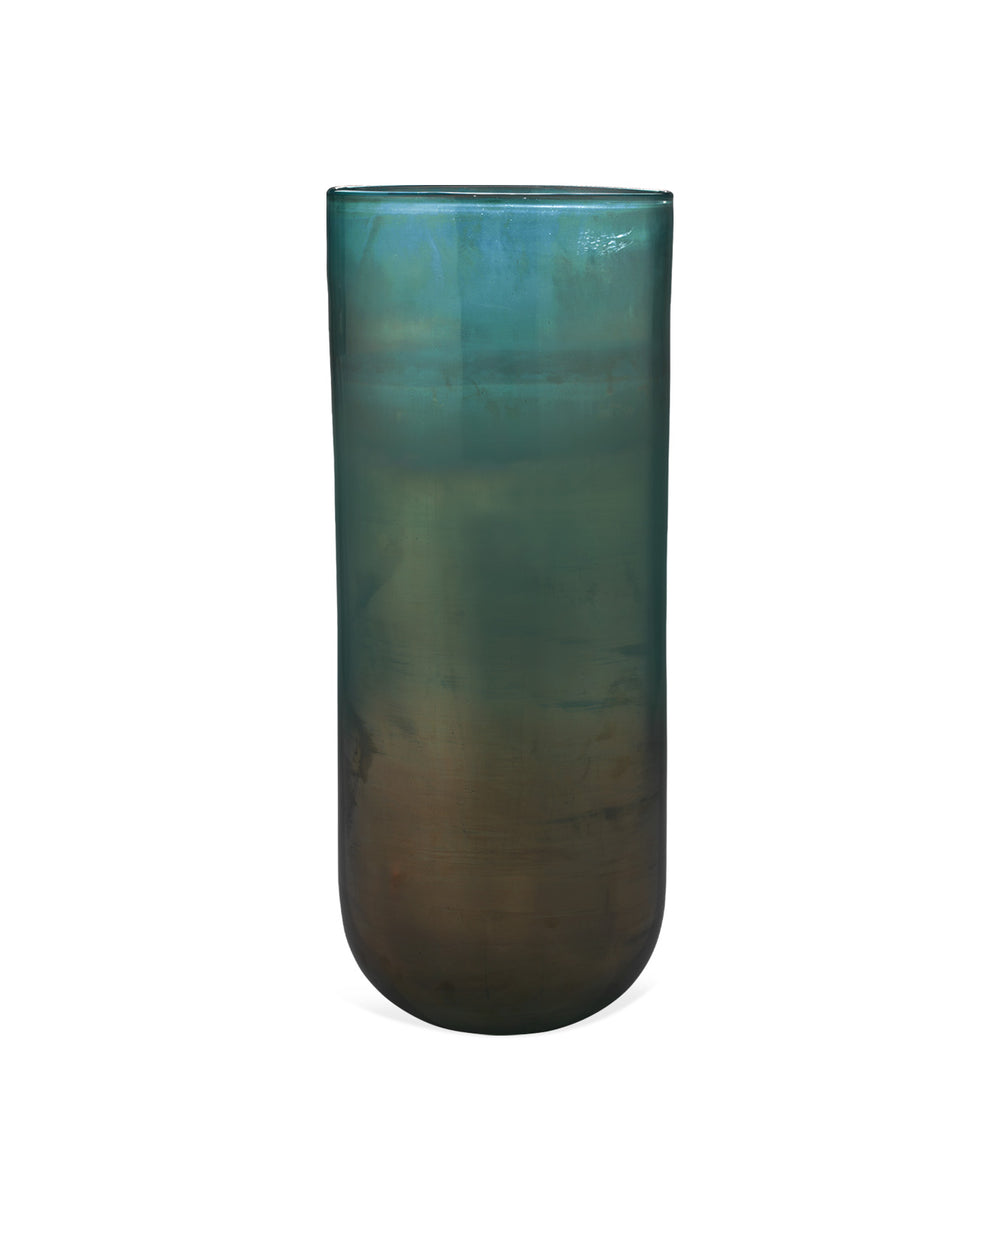 Metallic Vapor Vase in 2 Colors and Sizes